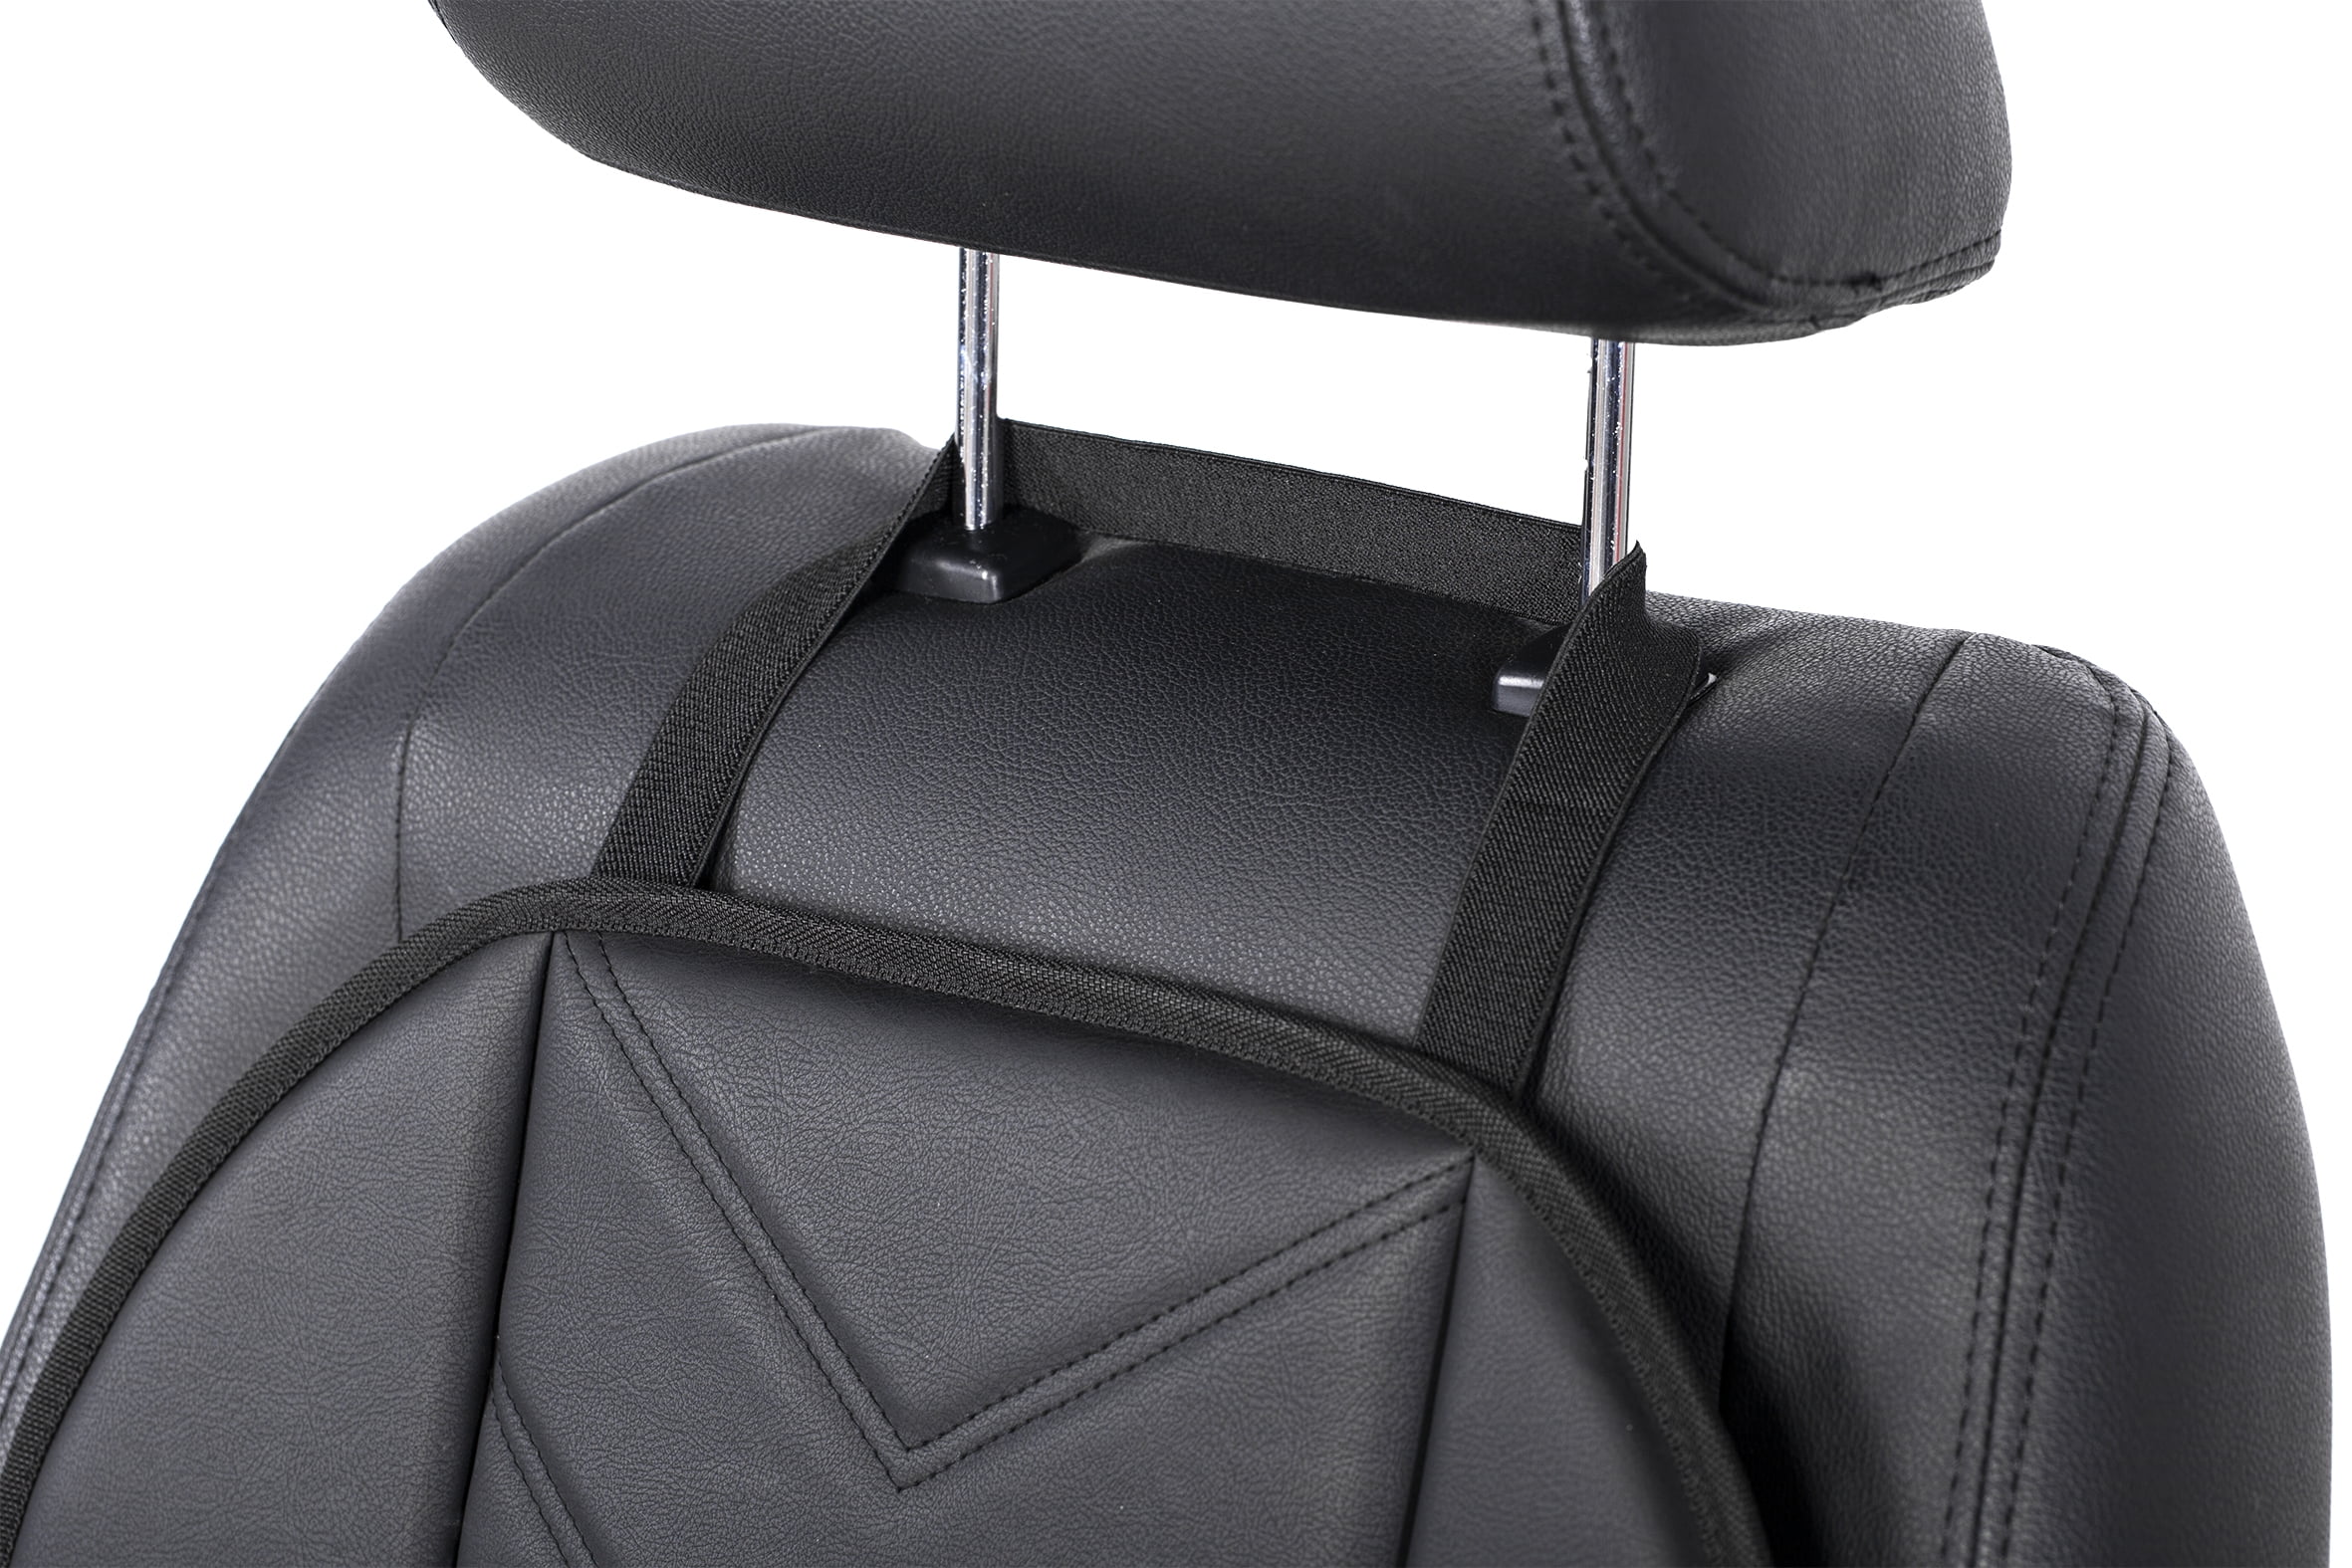 Auto Drive 1Piece Car Seat Cushion Memory Foam Black Universal Fit, 19CU26